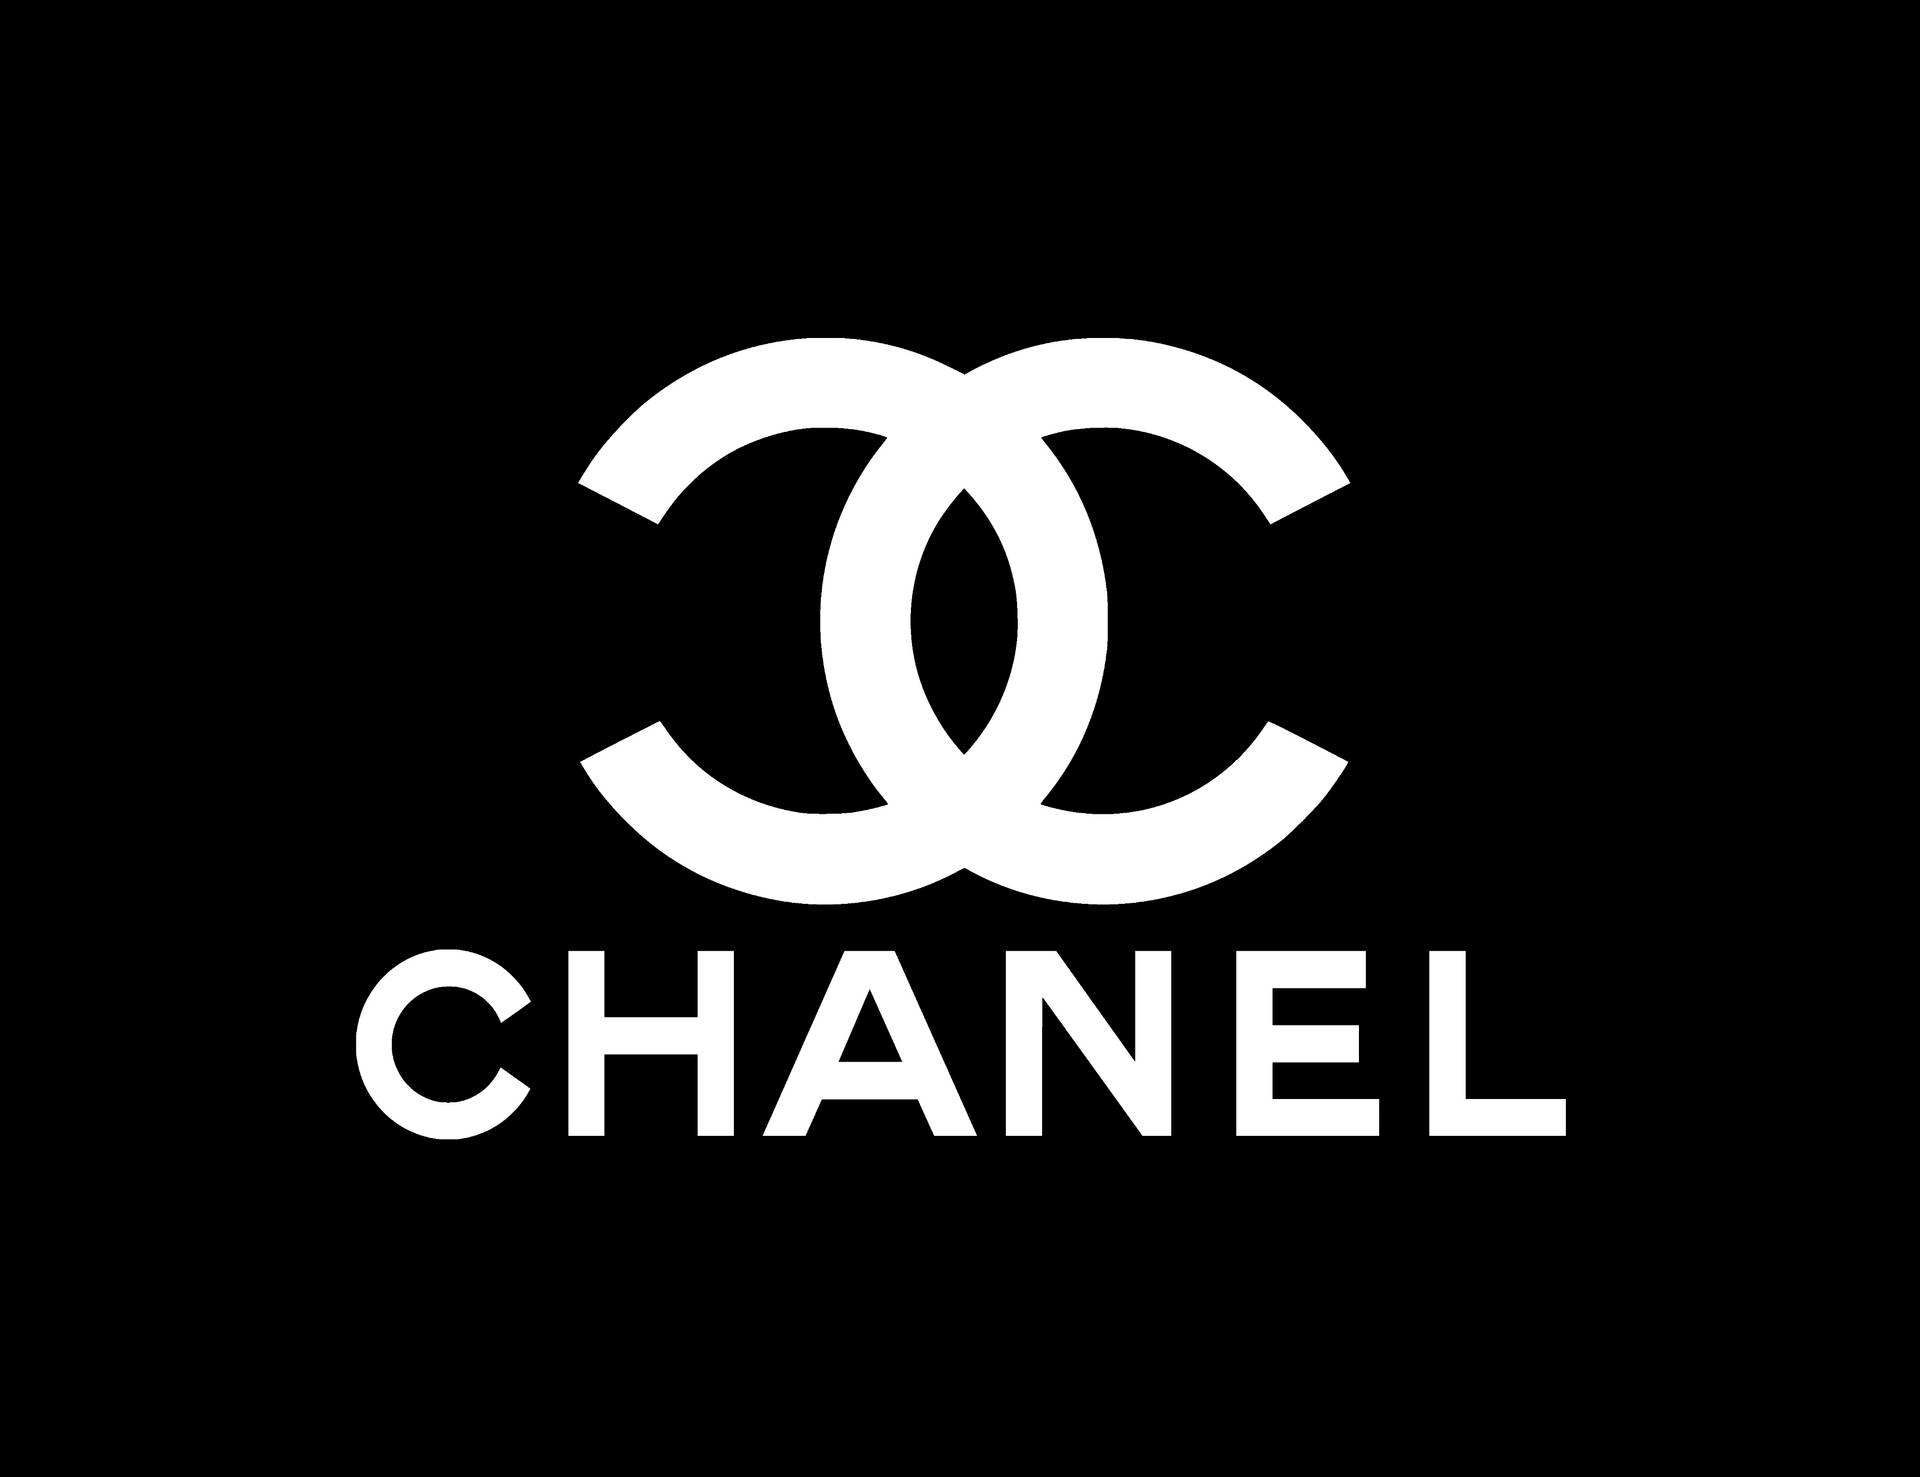 Minimalist Chanel fashion logo wallpaper.